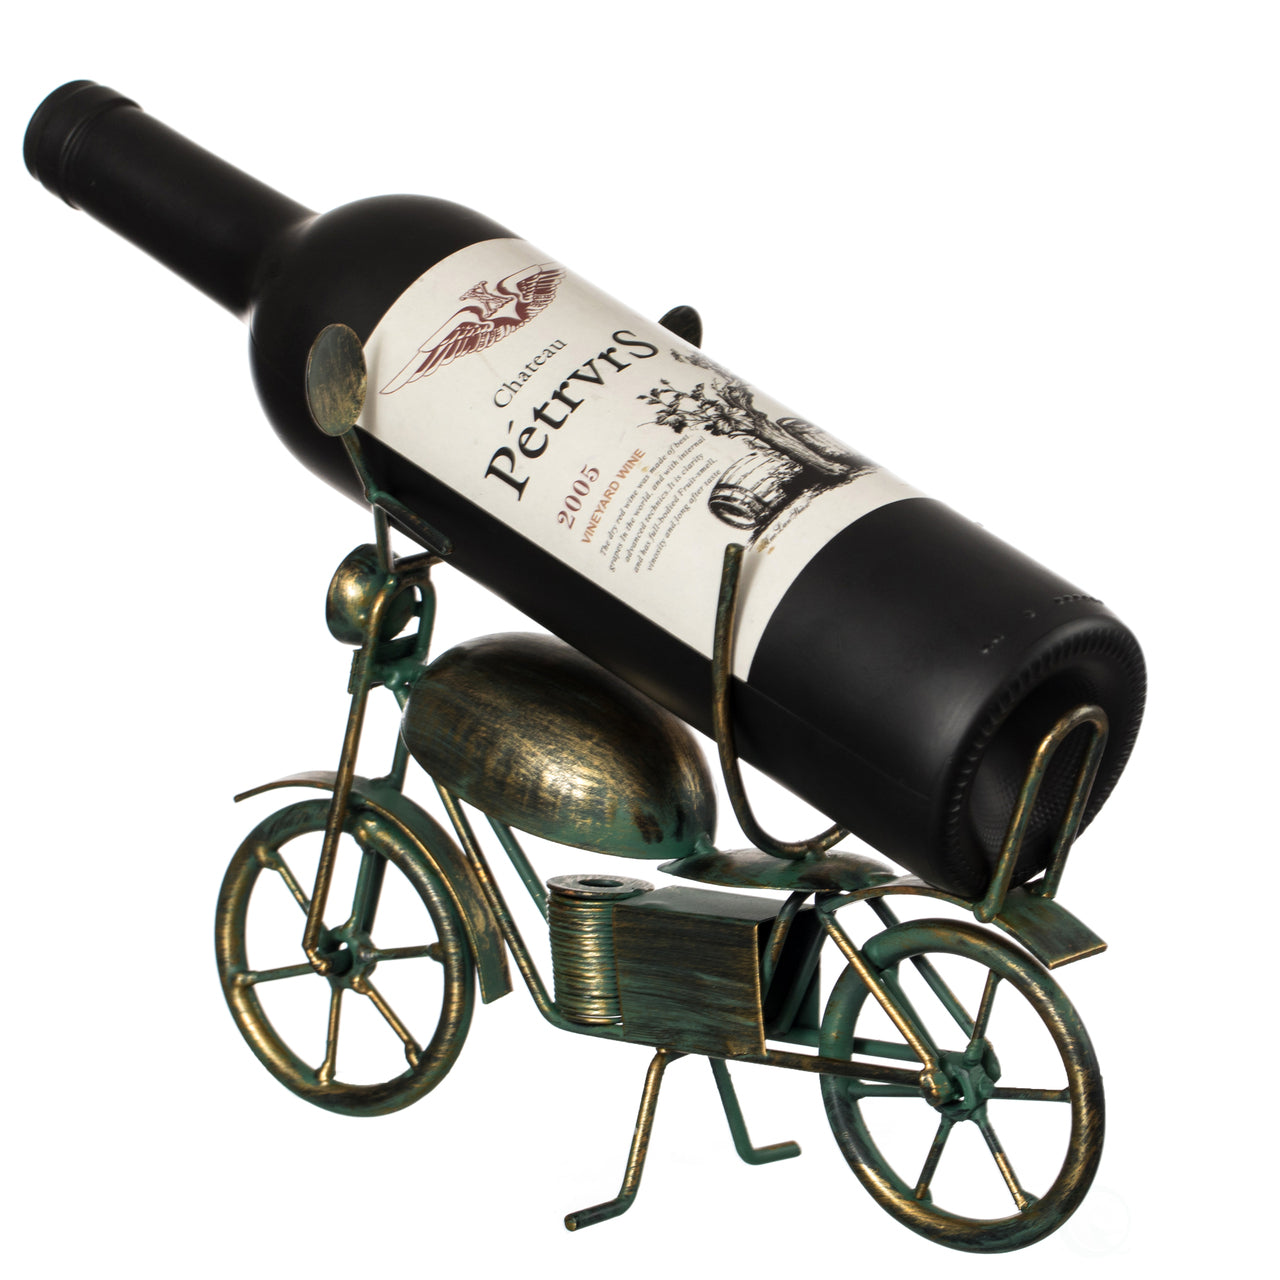 Metal Figurine Motorcycle Shaped Vintage Wine Single Bottle Holder Stand Rack QI004317-Wine Bottle Holders-The Wine Cooler Club